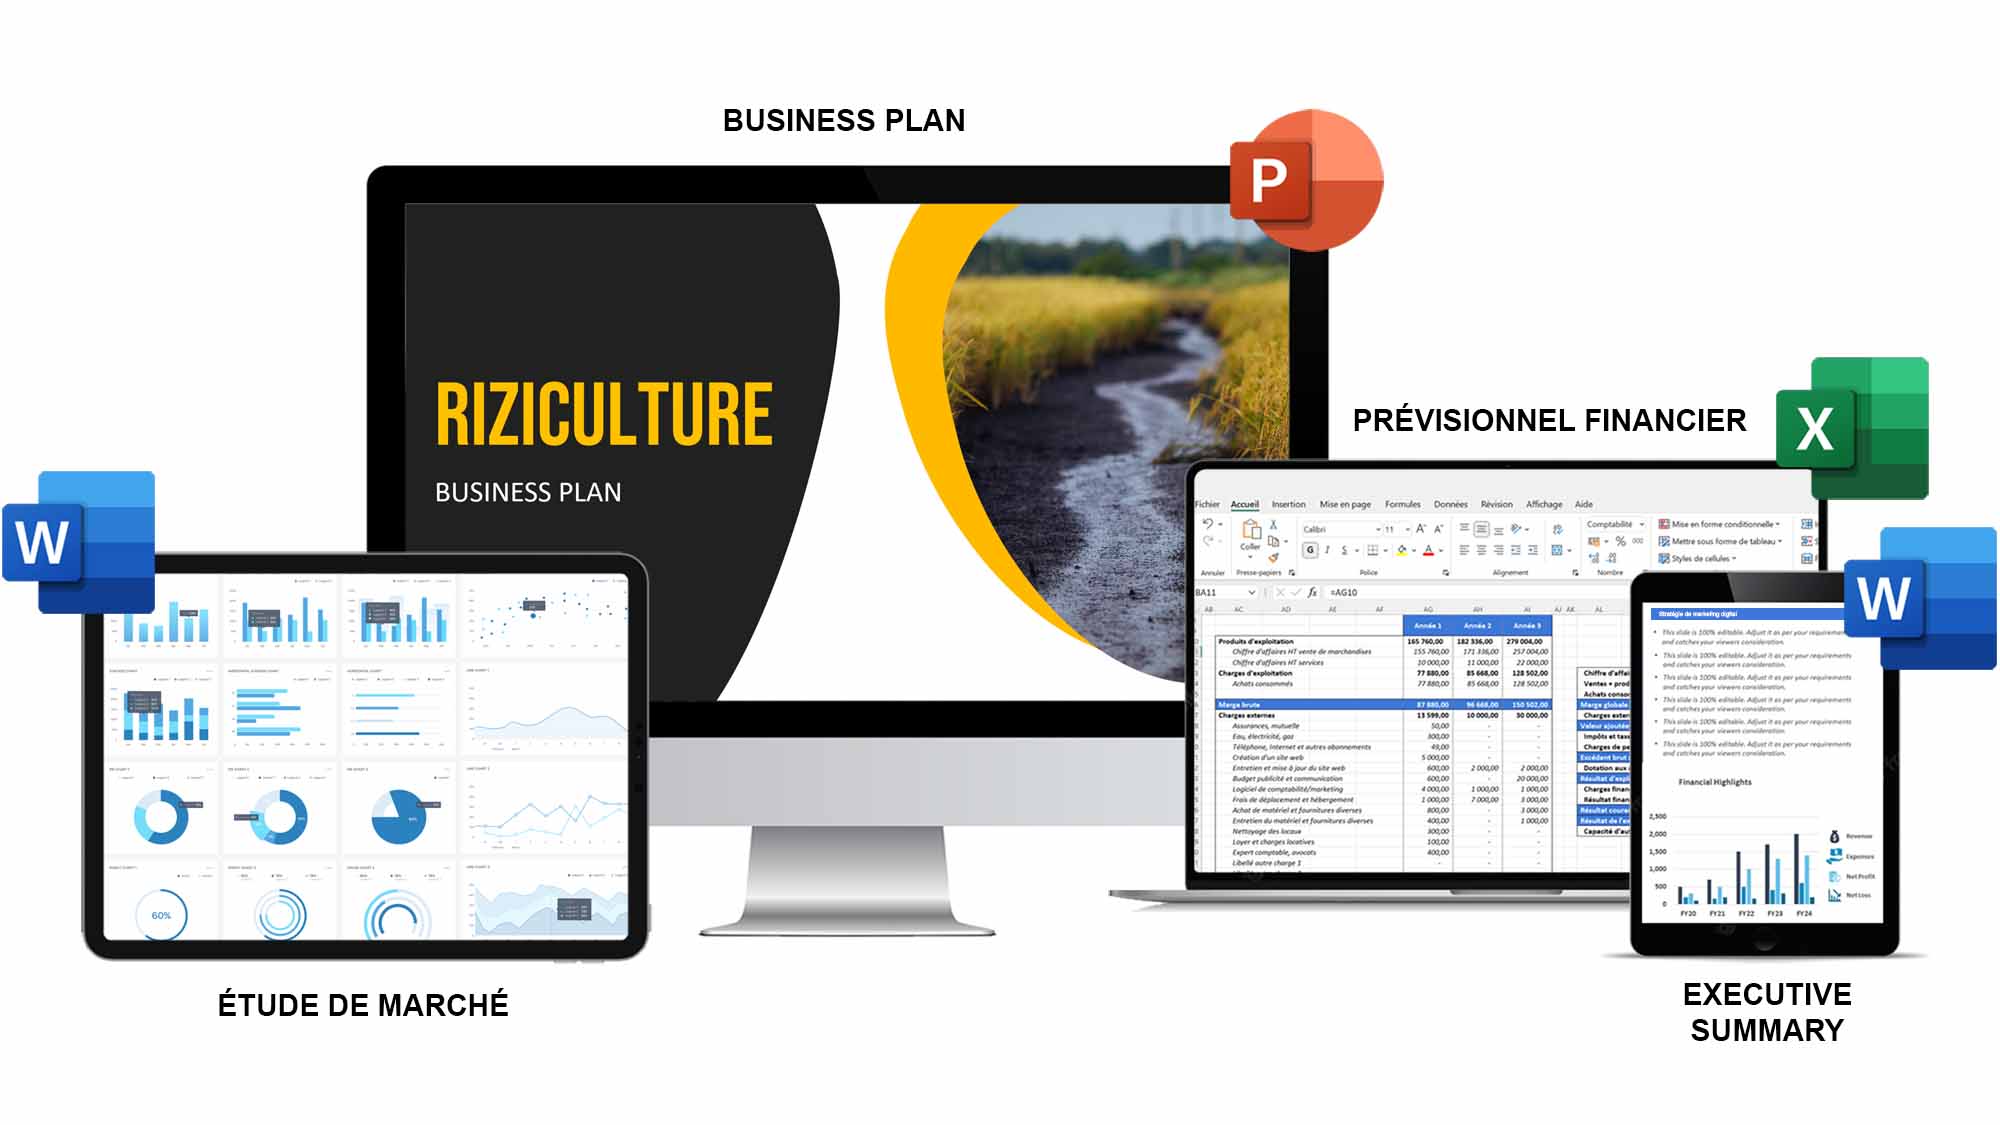 business plan riziculture